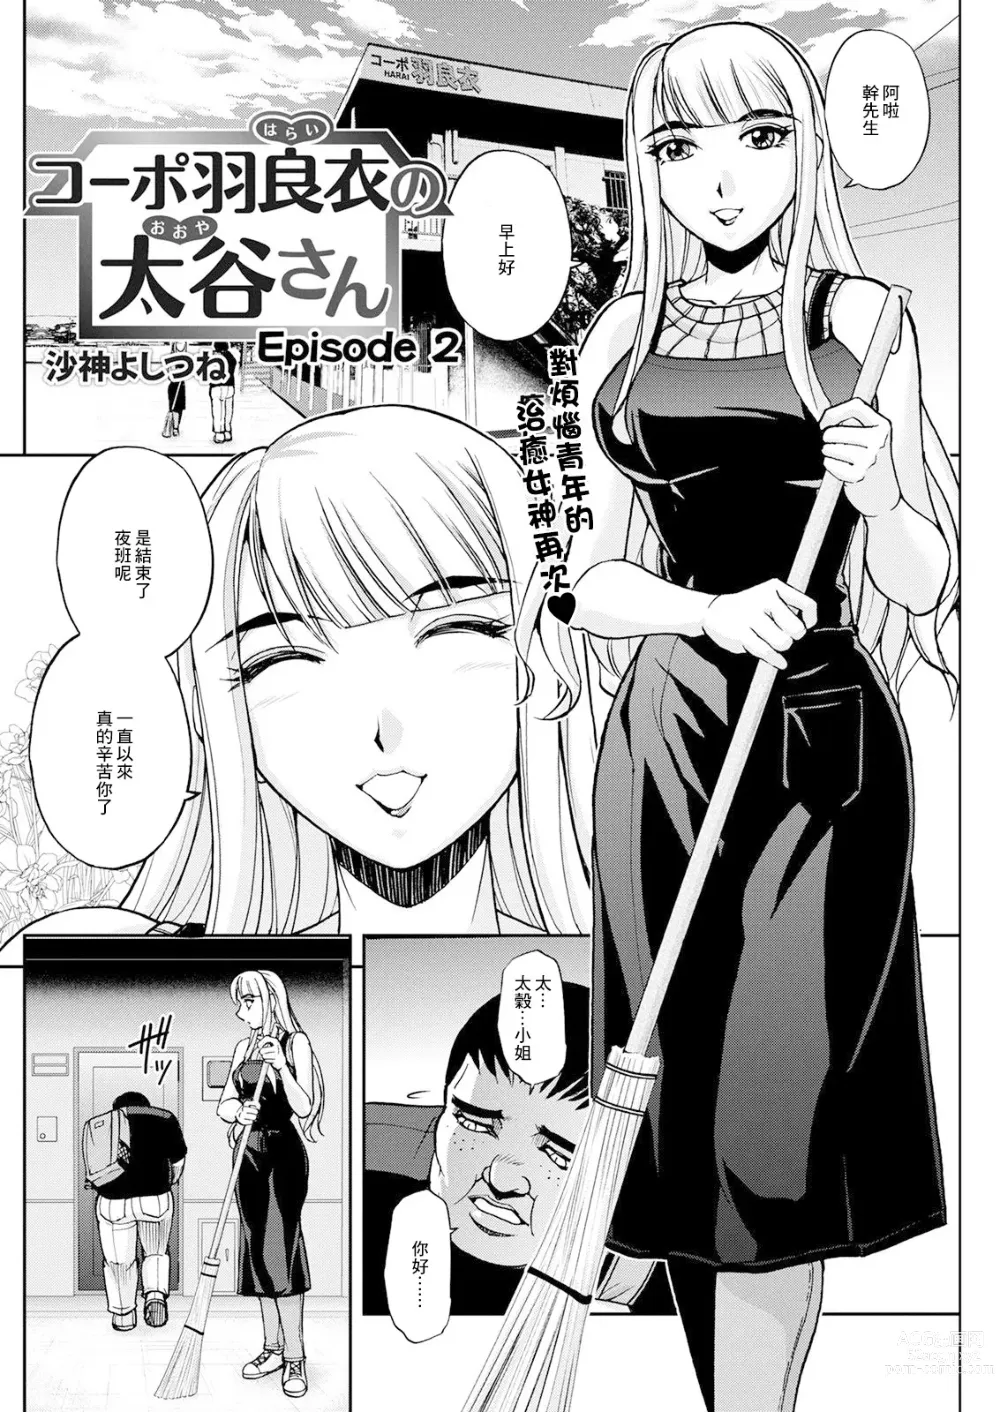 Page 4 of manga Corp Harai no Ooya-san Episode 2